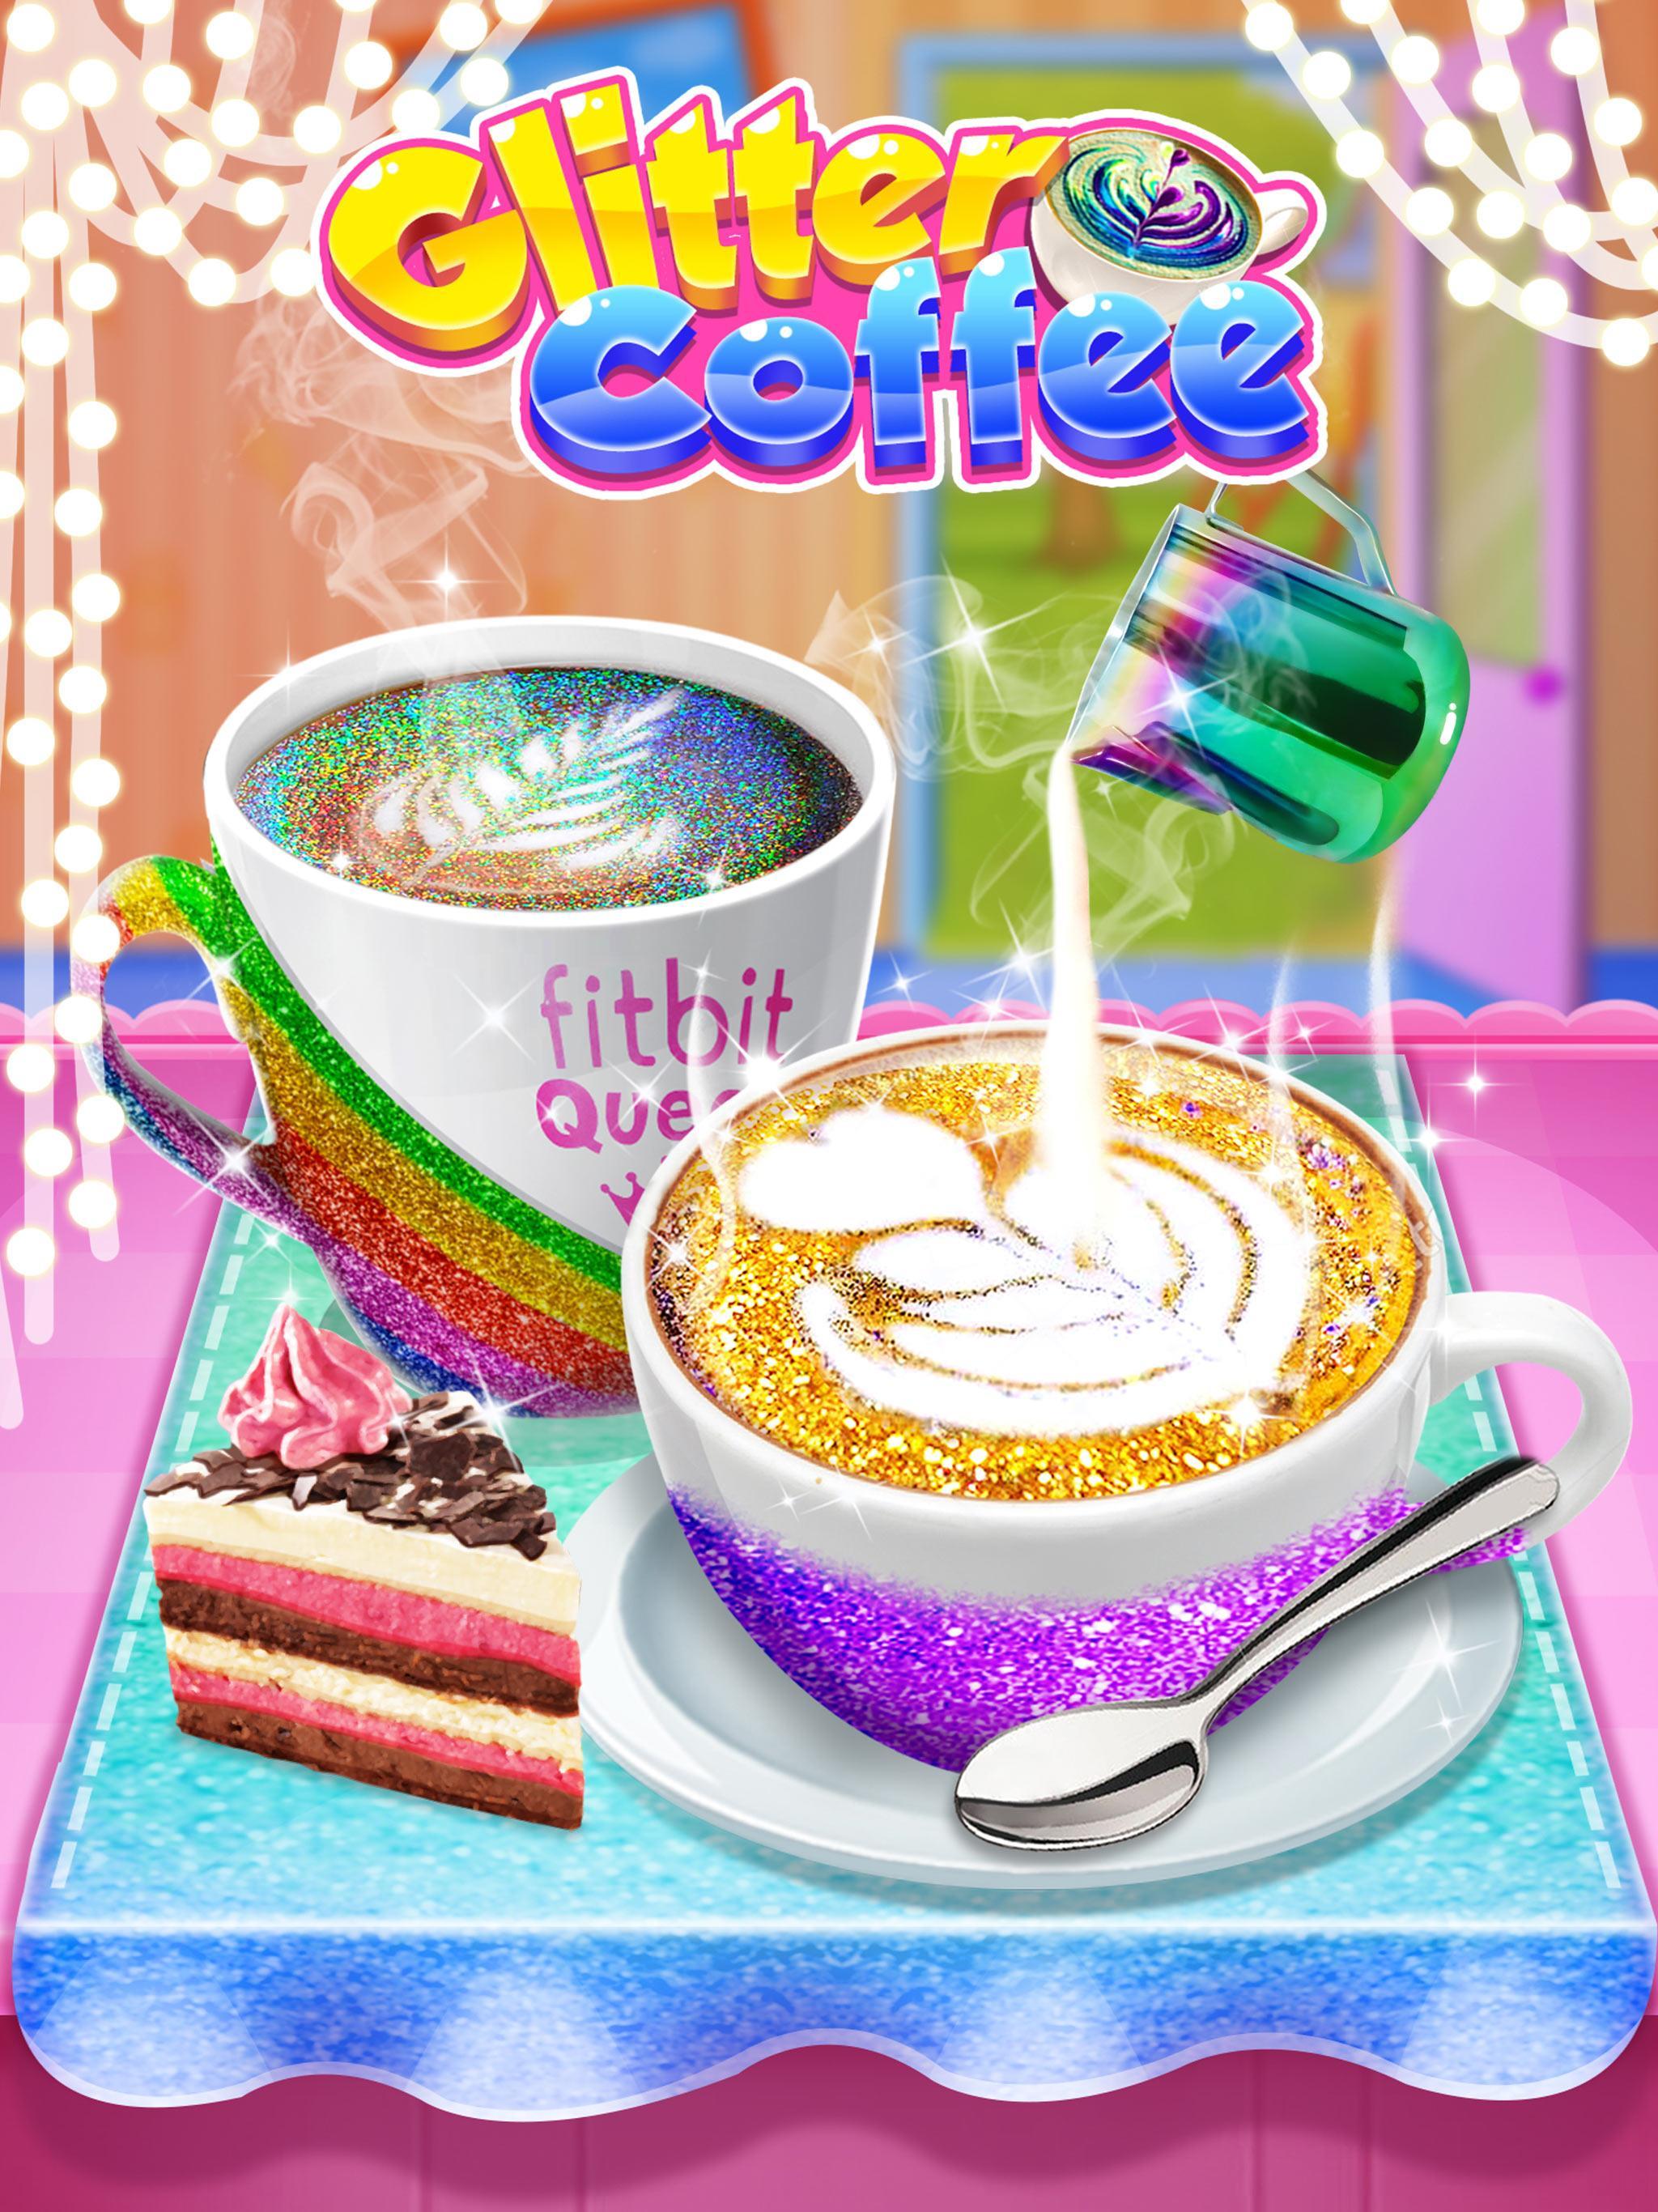 Glitter Coffee - Make The Most Trendy Foodのキャプチャ